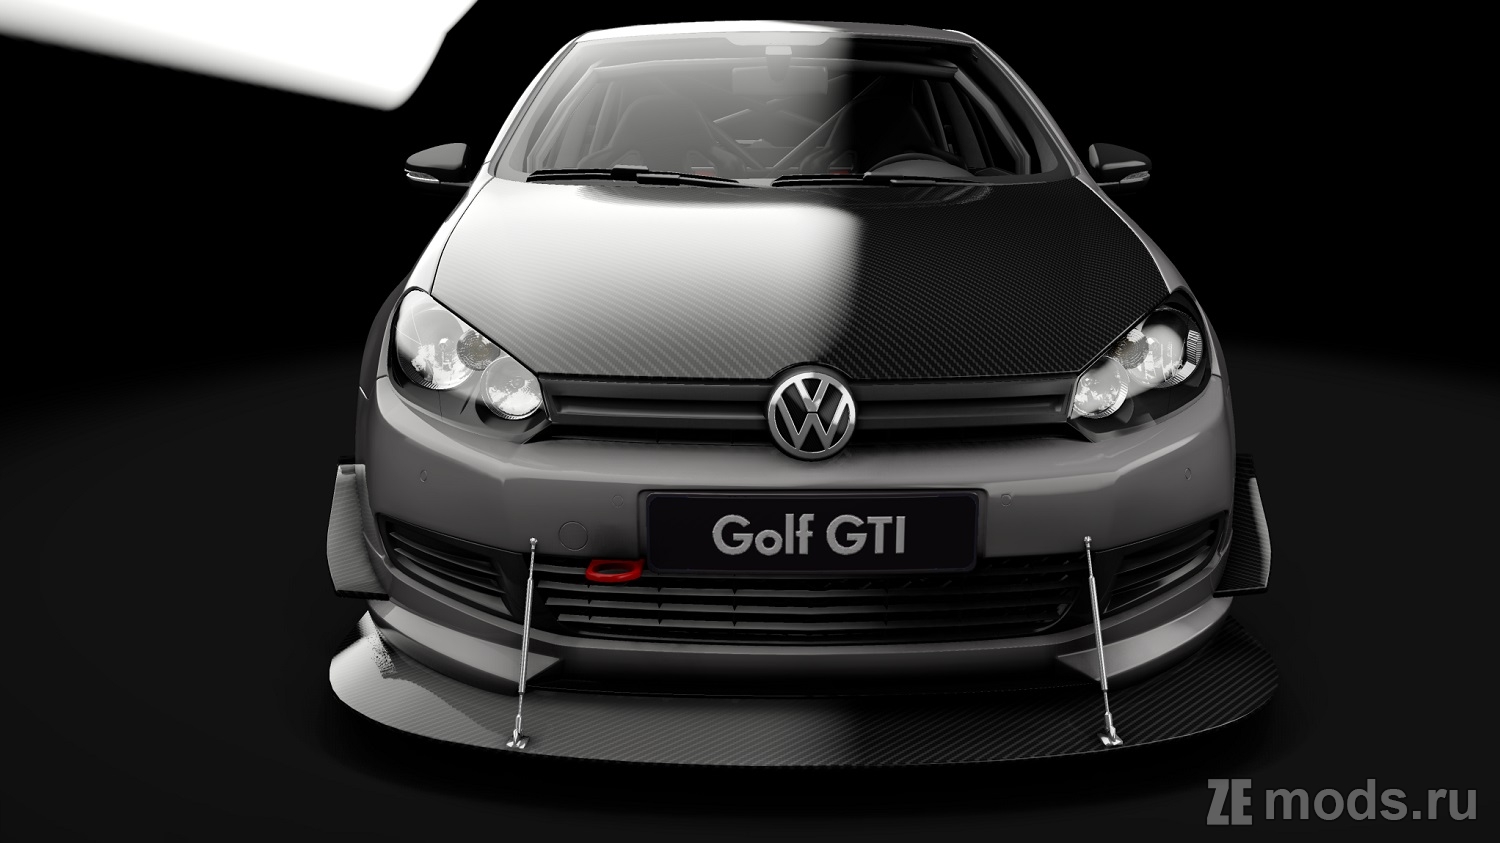 Мод Volkswagen Golf GTi 2010 Track для Assetto Corsa